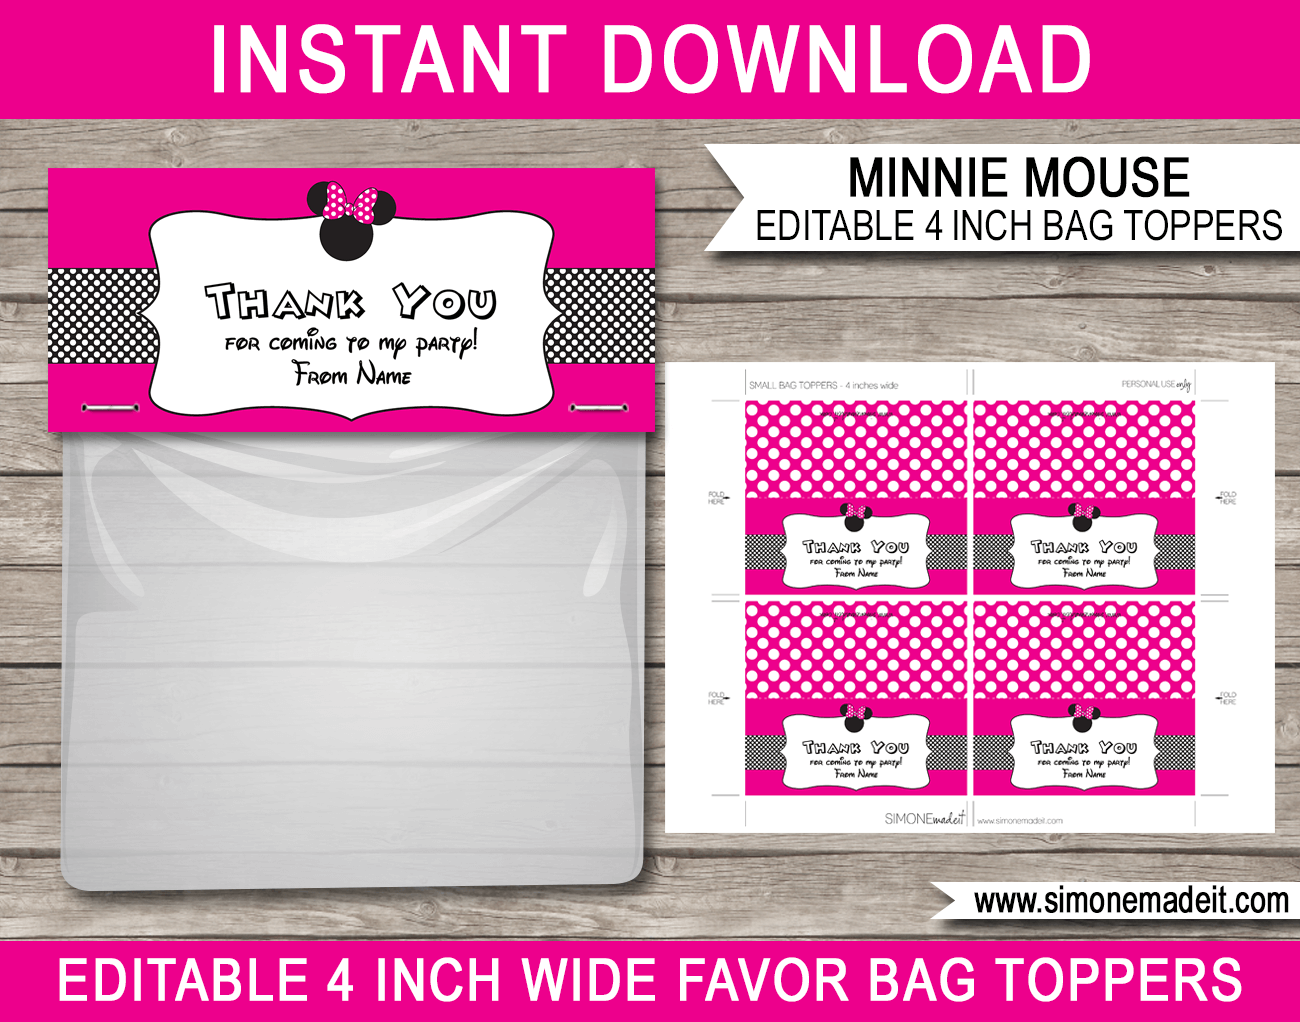 Editable Minnie Mouse Party Favor Bag Toppers | Minnie Mouse Theme Birthday Party | Printable DIY Template | INSTANT DOWNLOAD via SIMONEmadeit.com